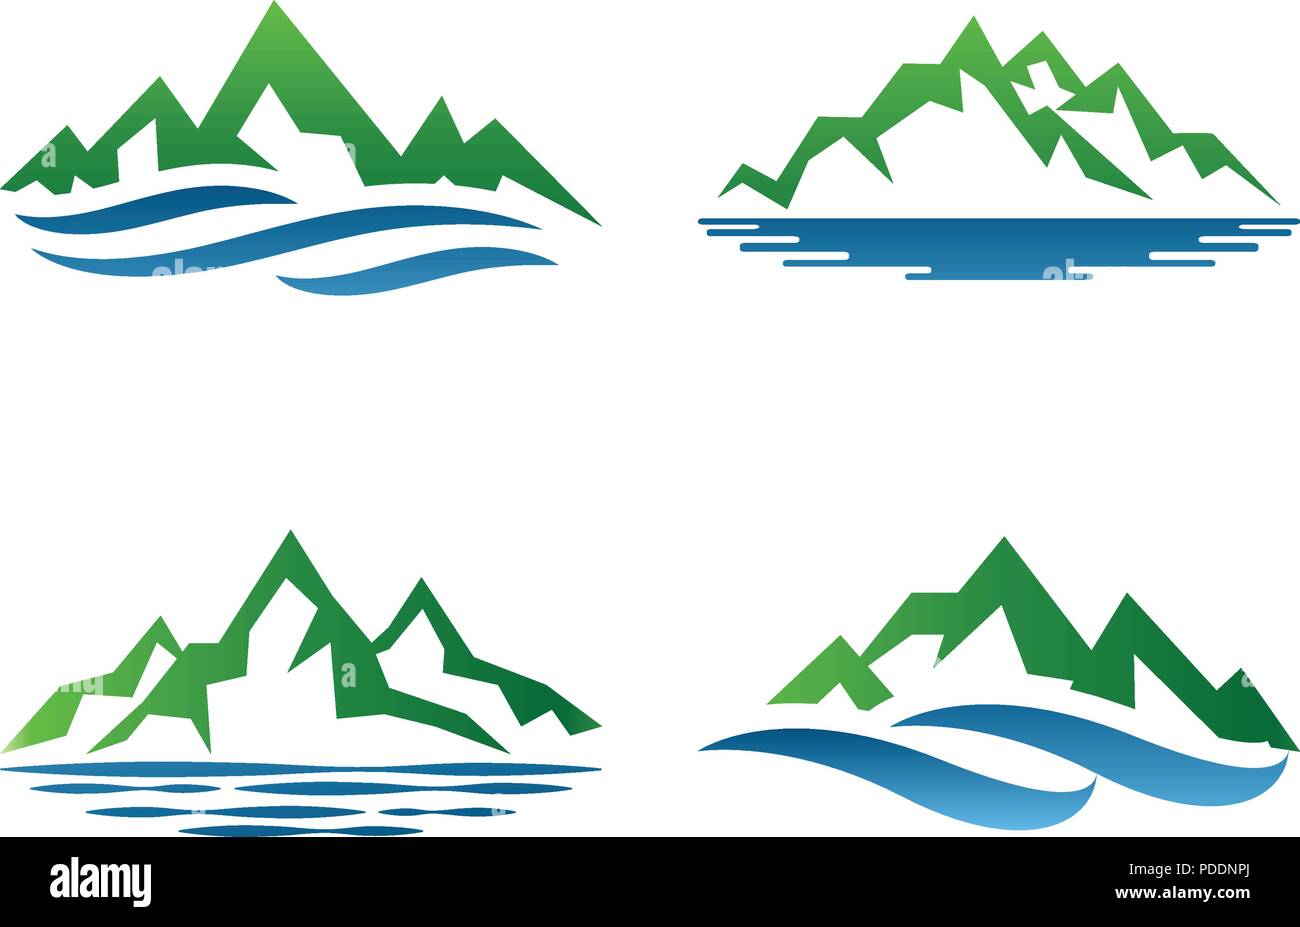 Illustration of mountain logo design template vector Stock Vector Image ...